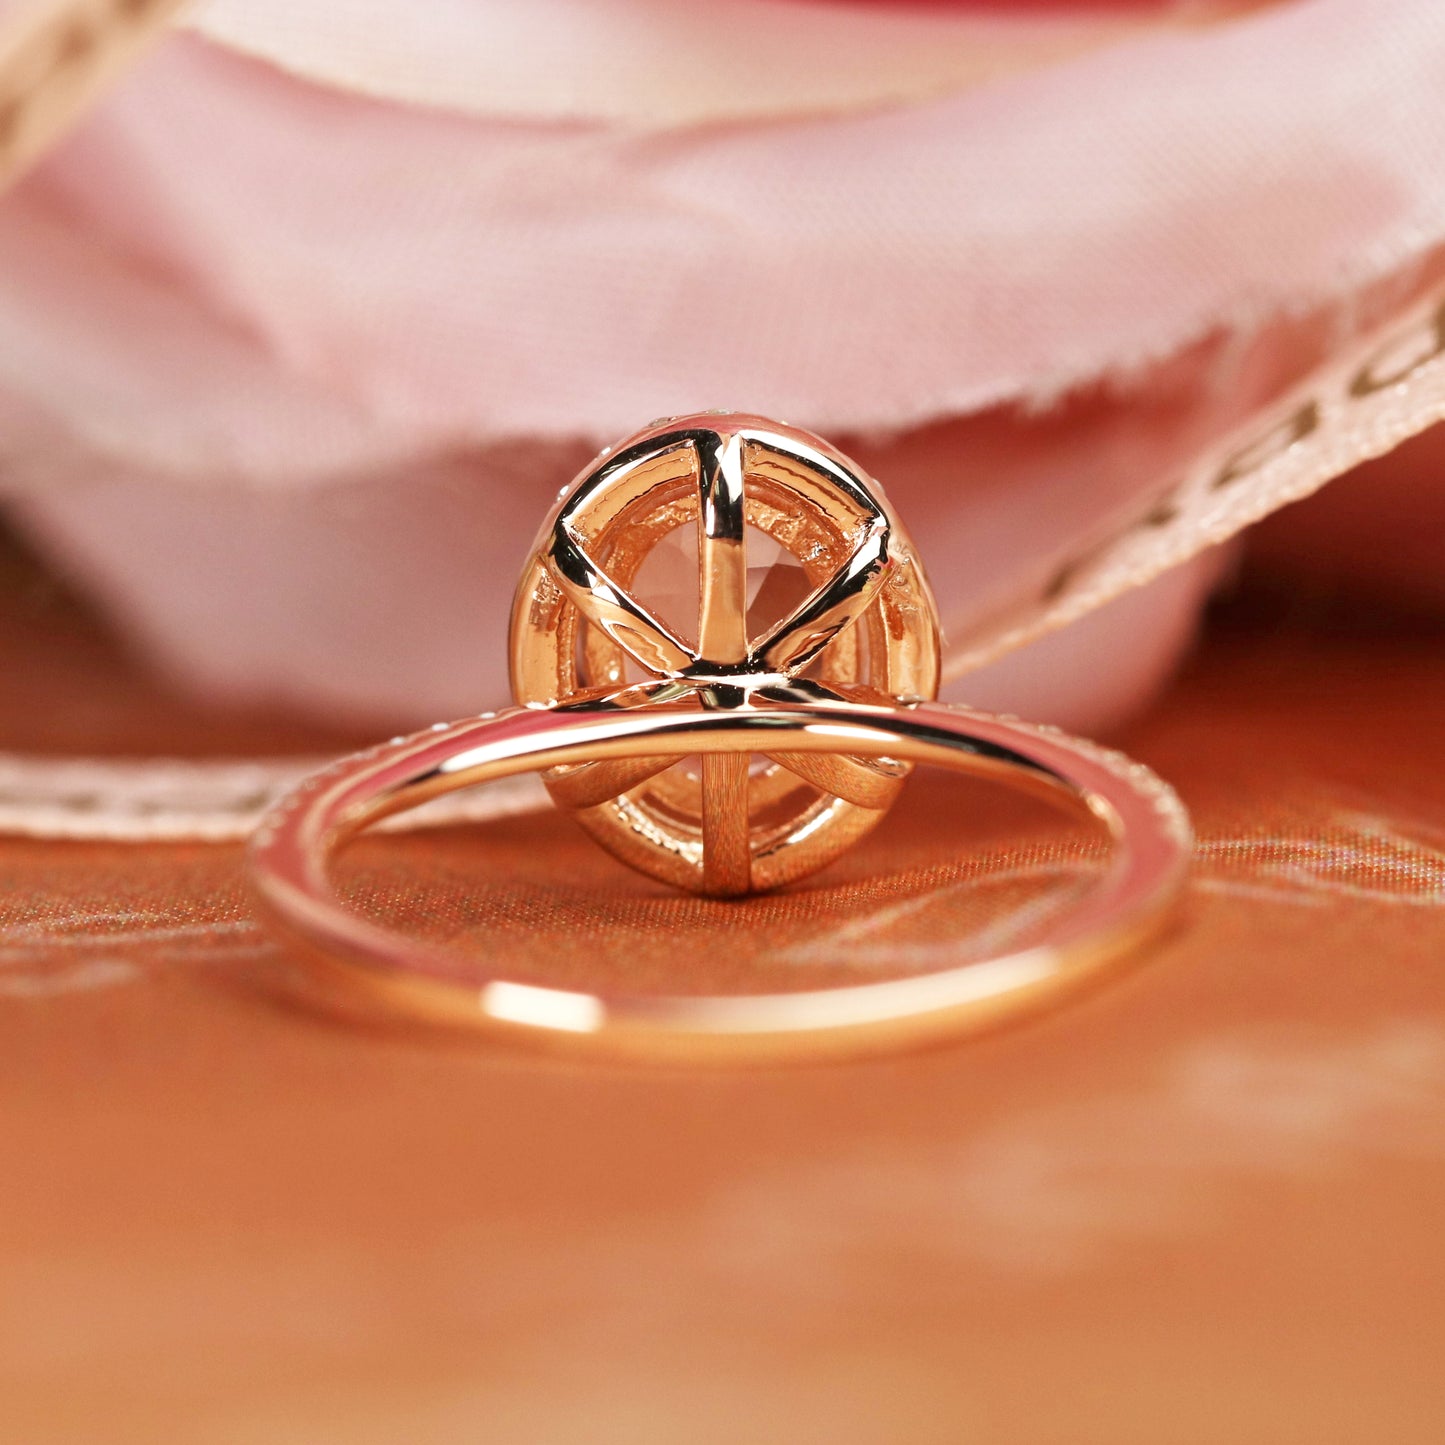 Sale Popular 1.5 carat peach pink Morganite with Diamond Halo Wedding Engagement Ring for Women